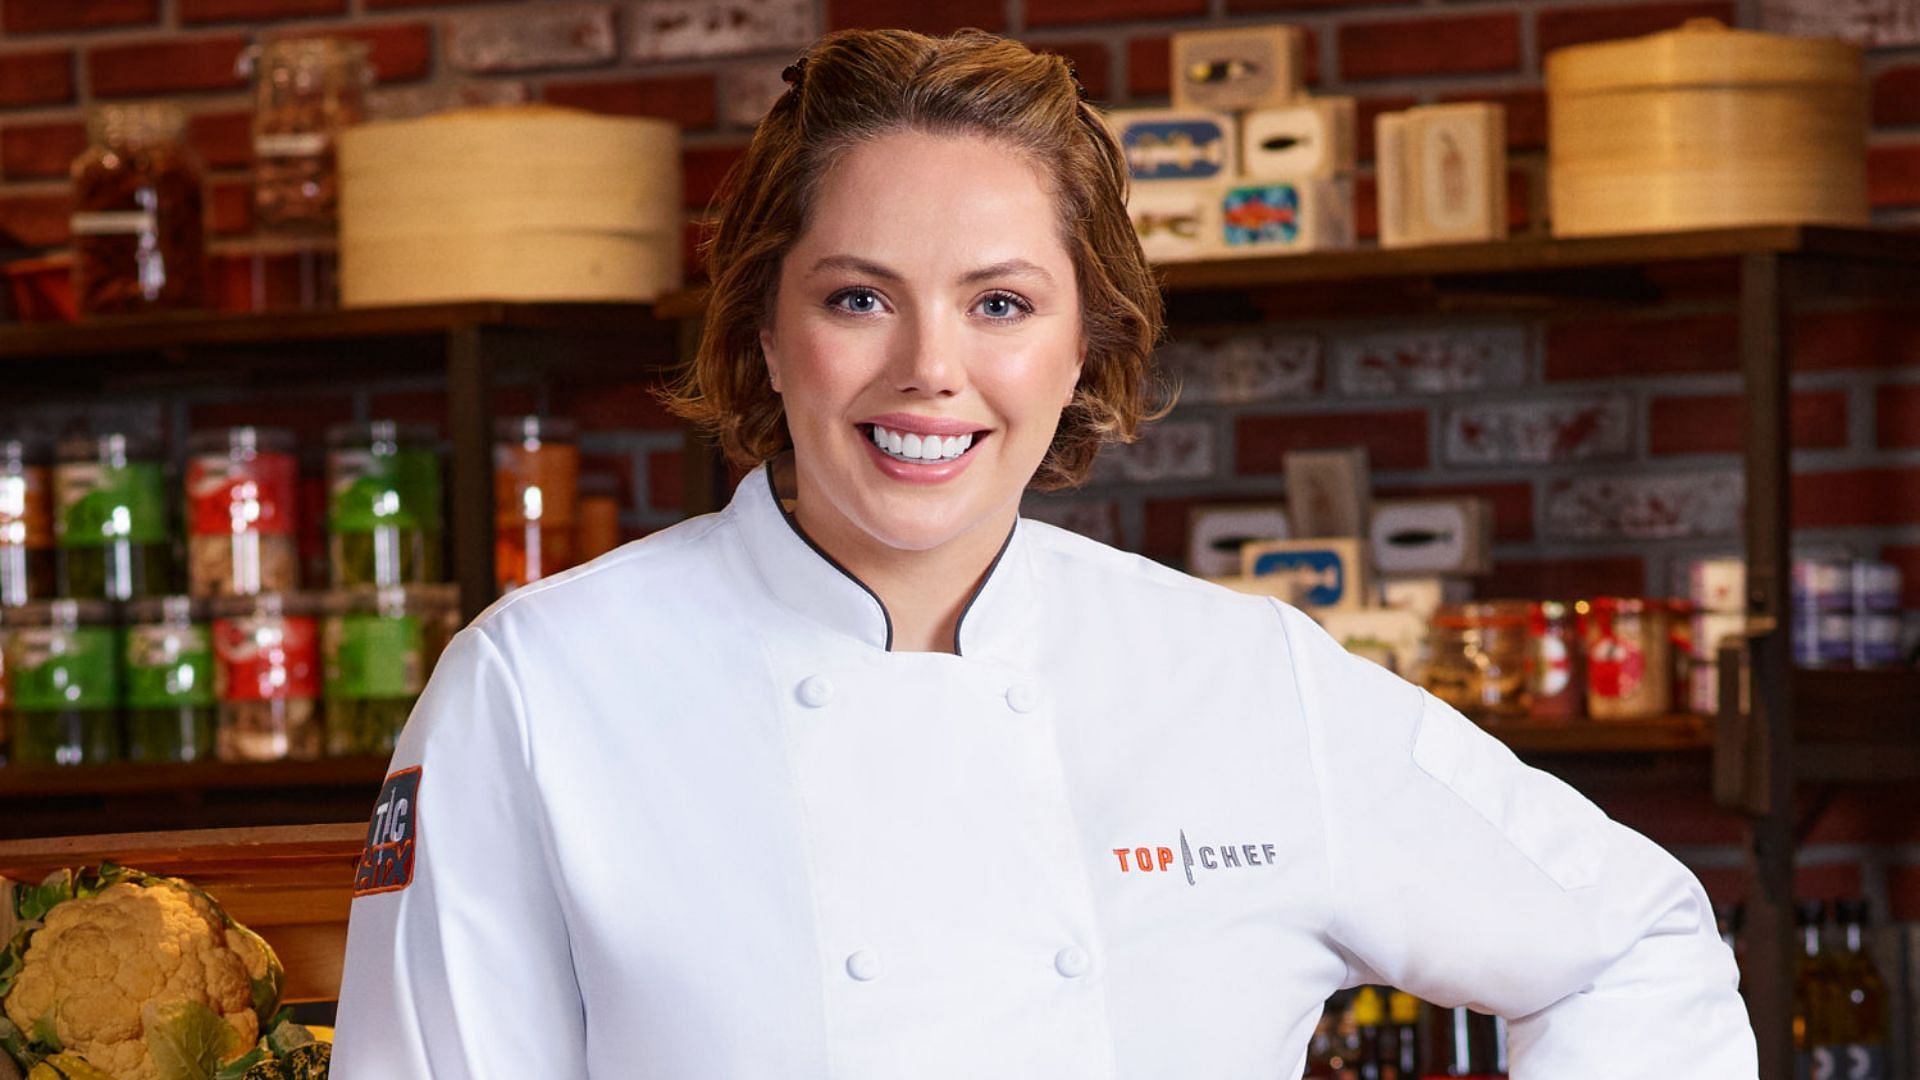 Meet Top Chef Season 19 contestant Stephanie Miller (Image via Bravo)